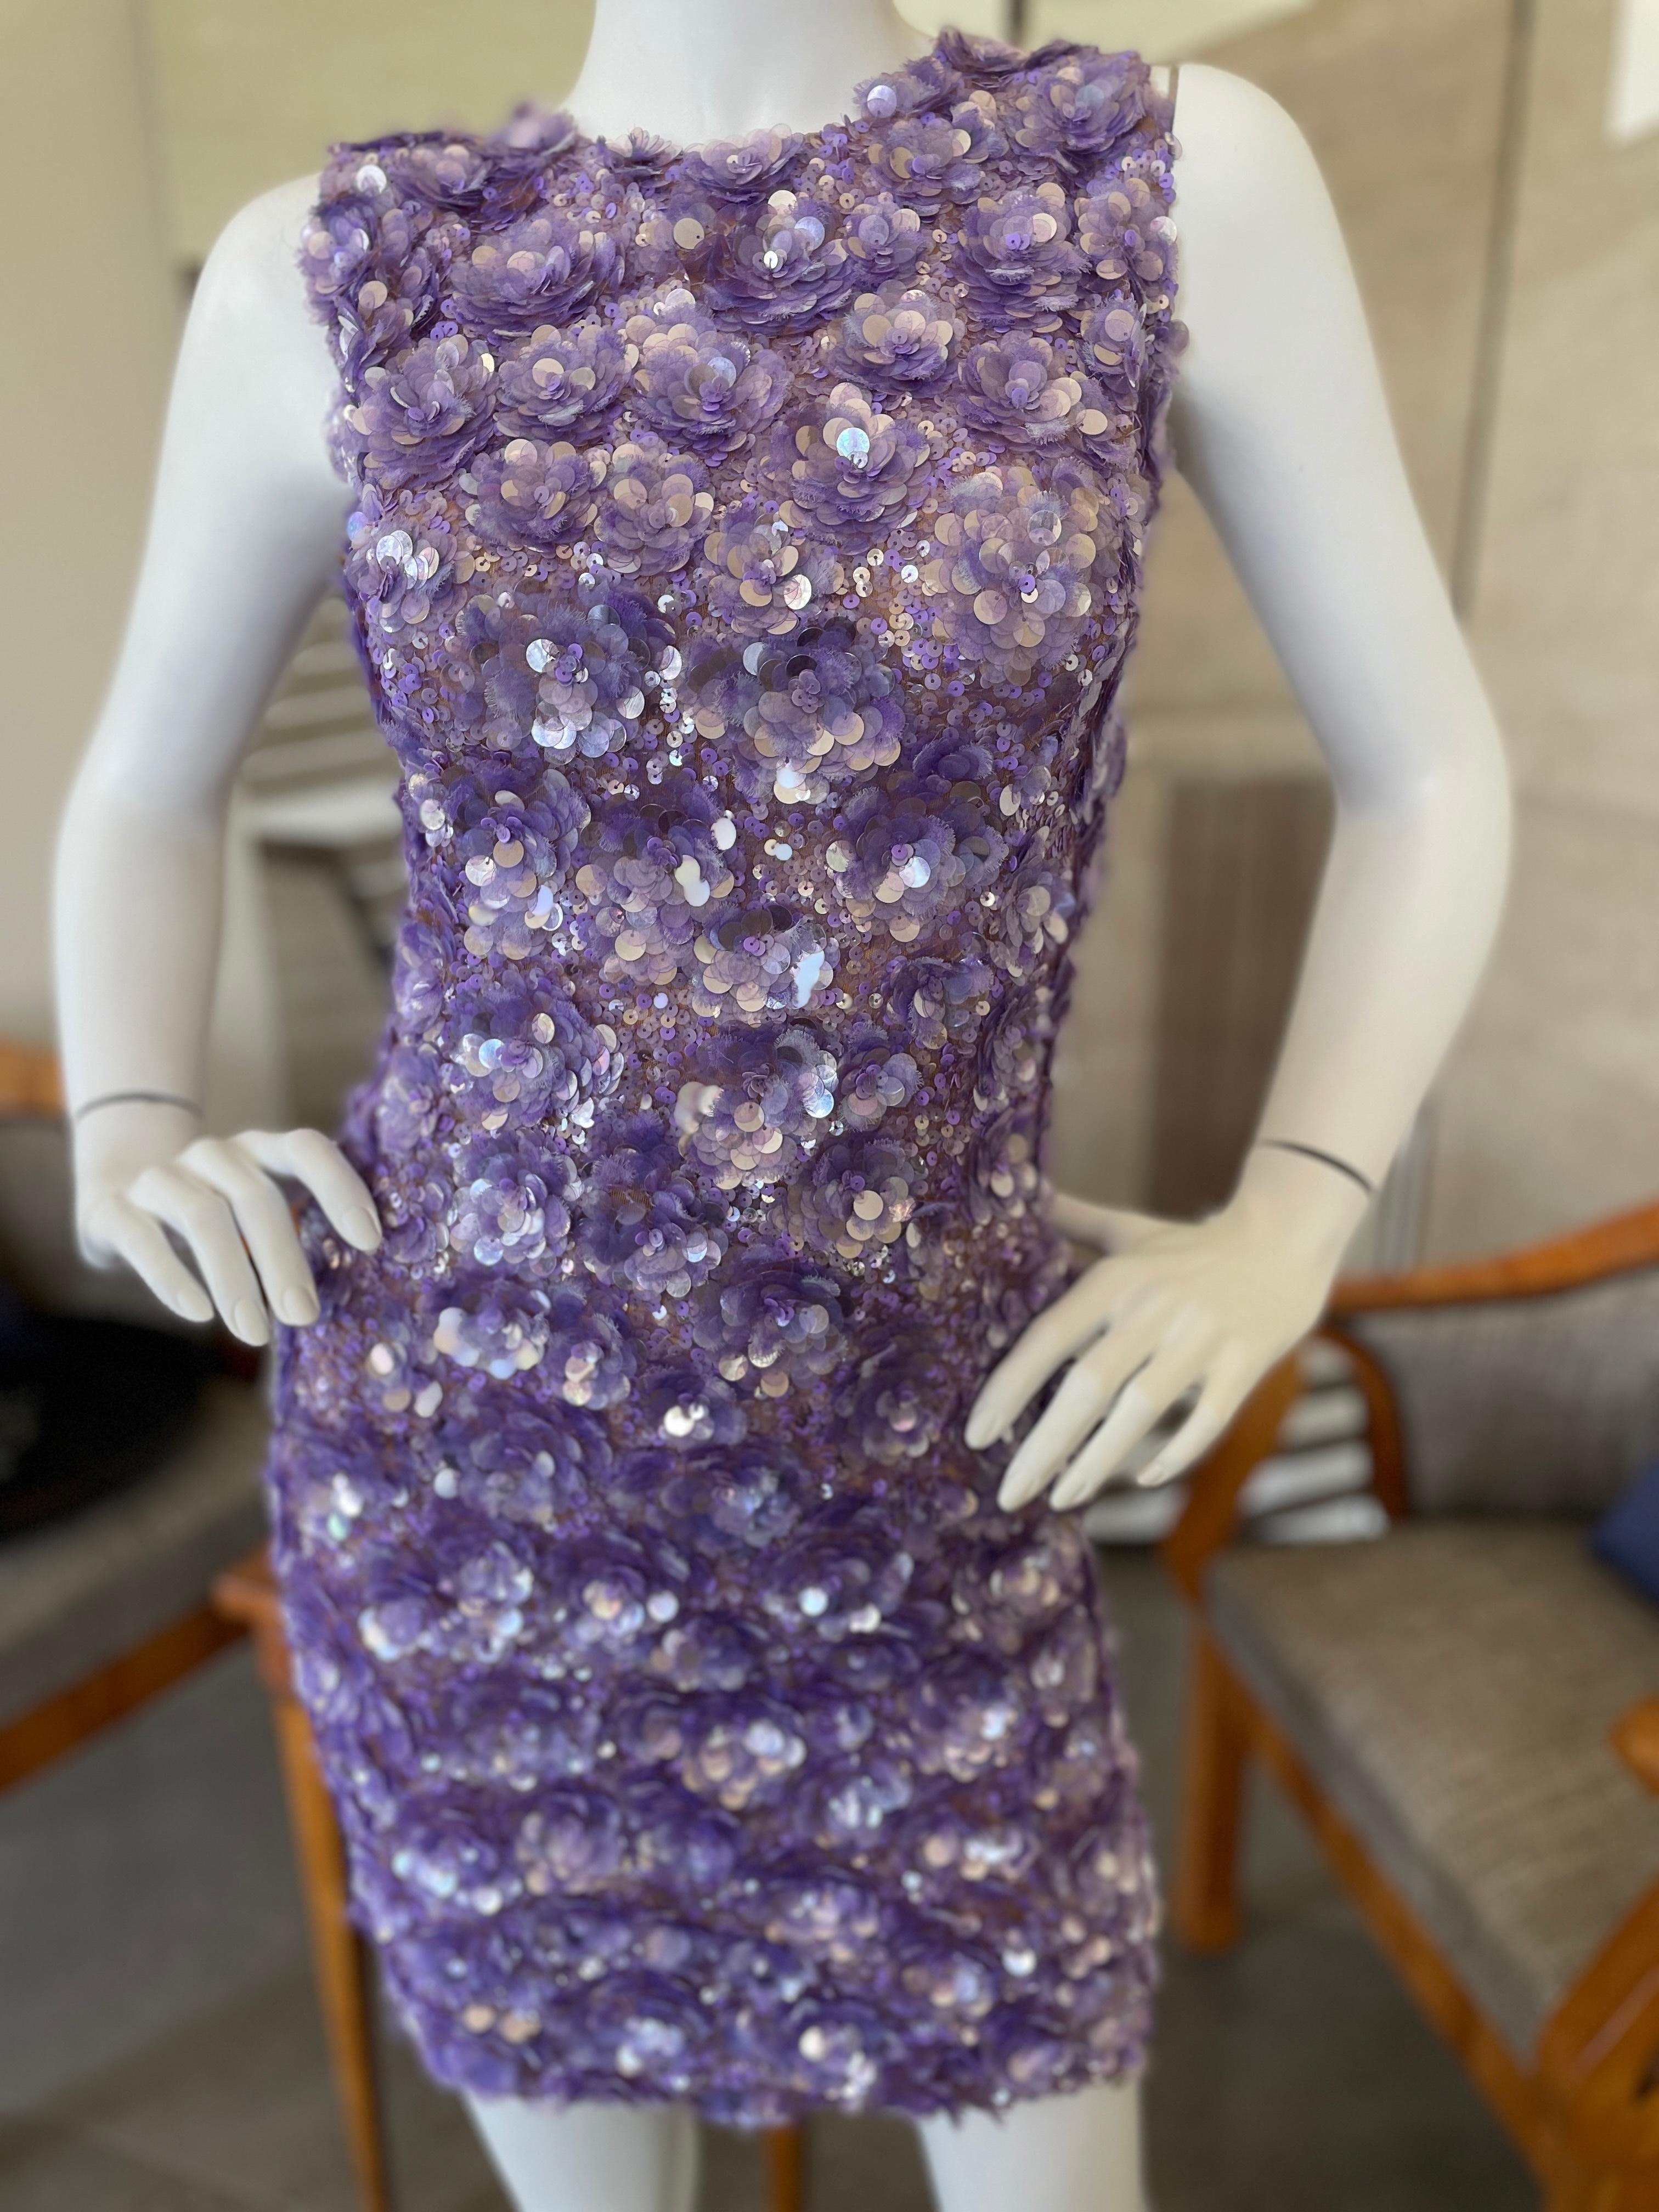 michael kors purple dress